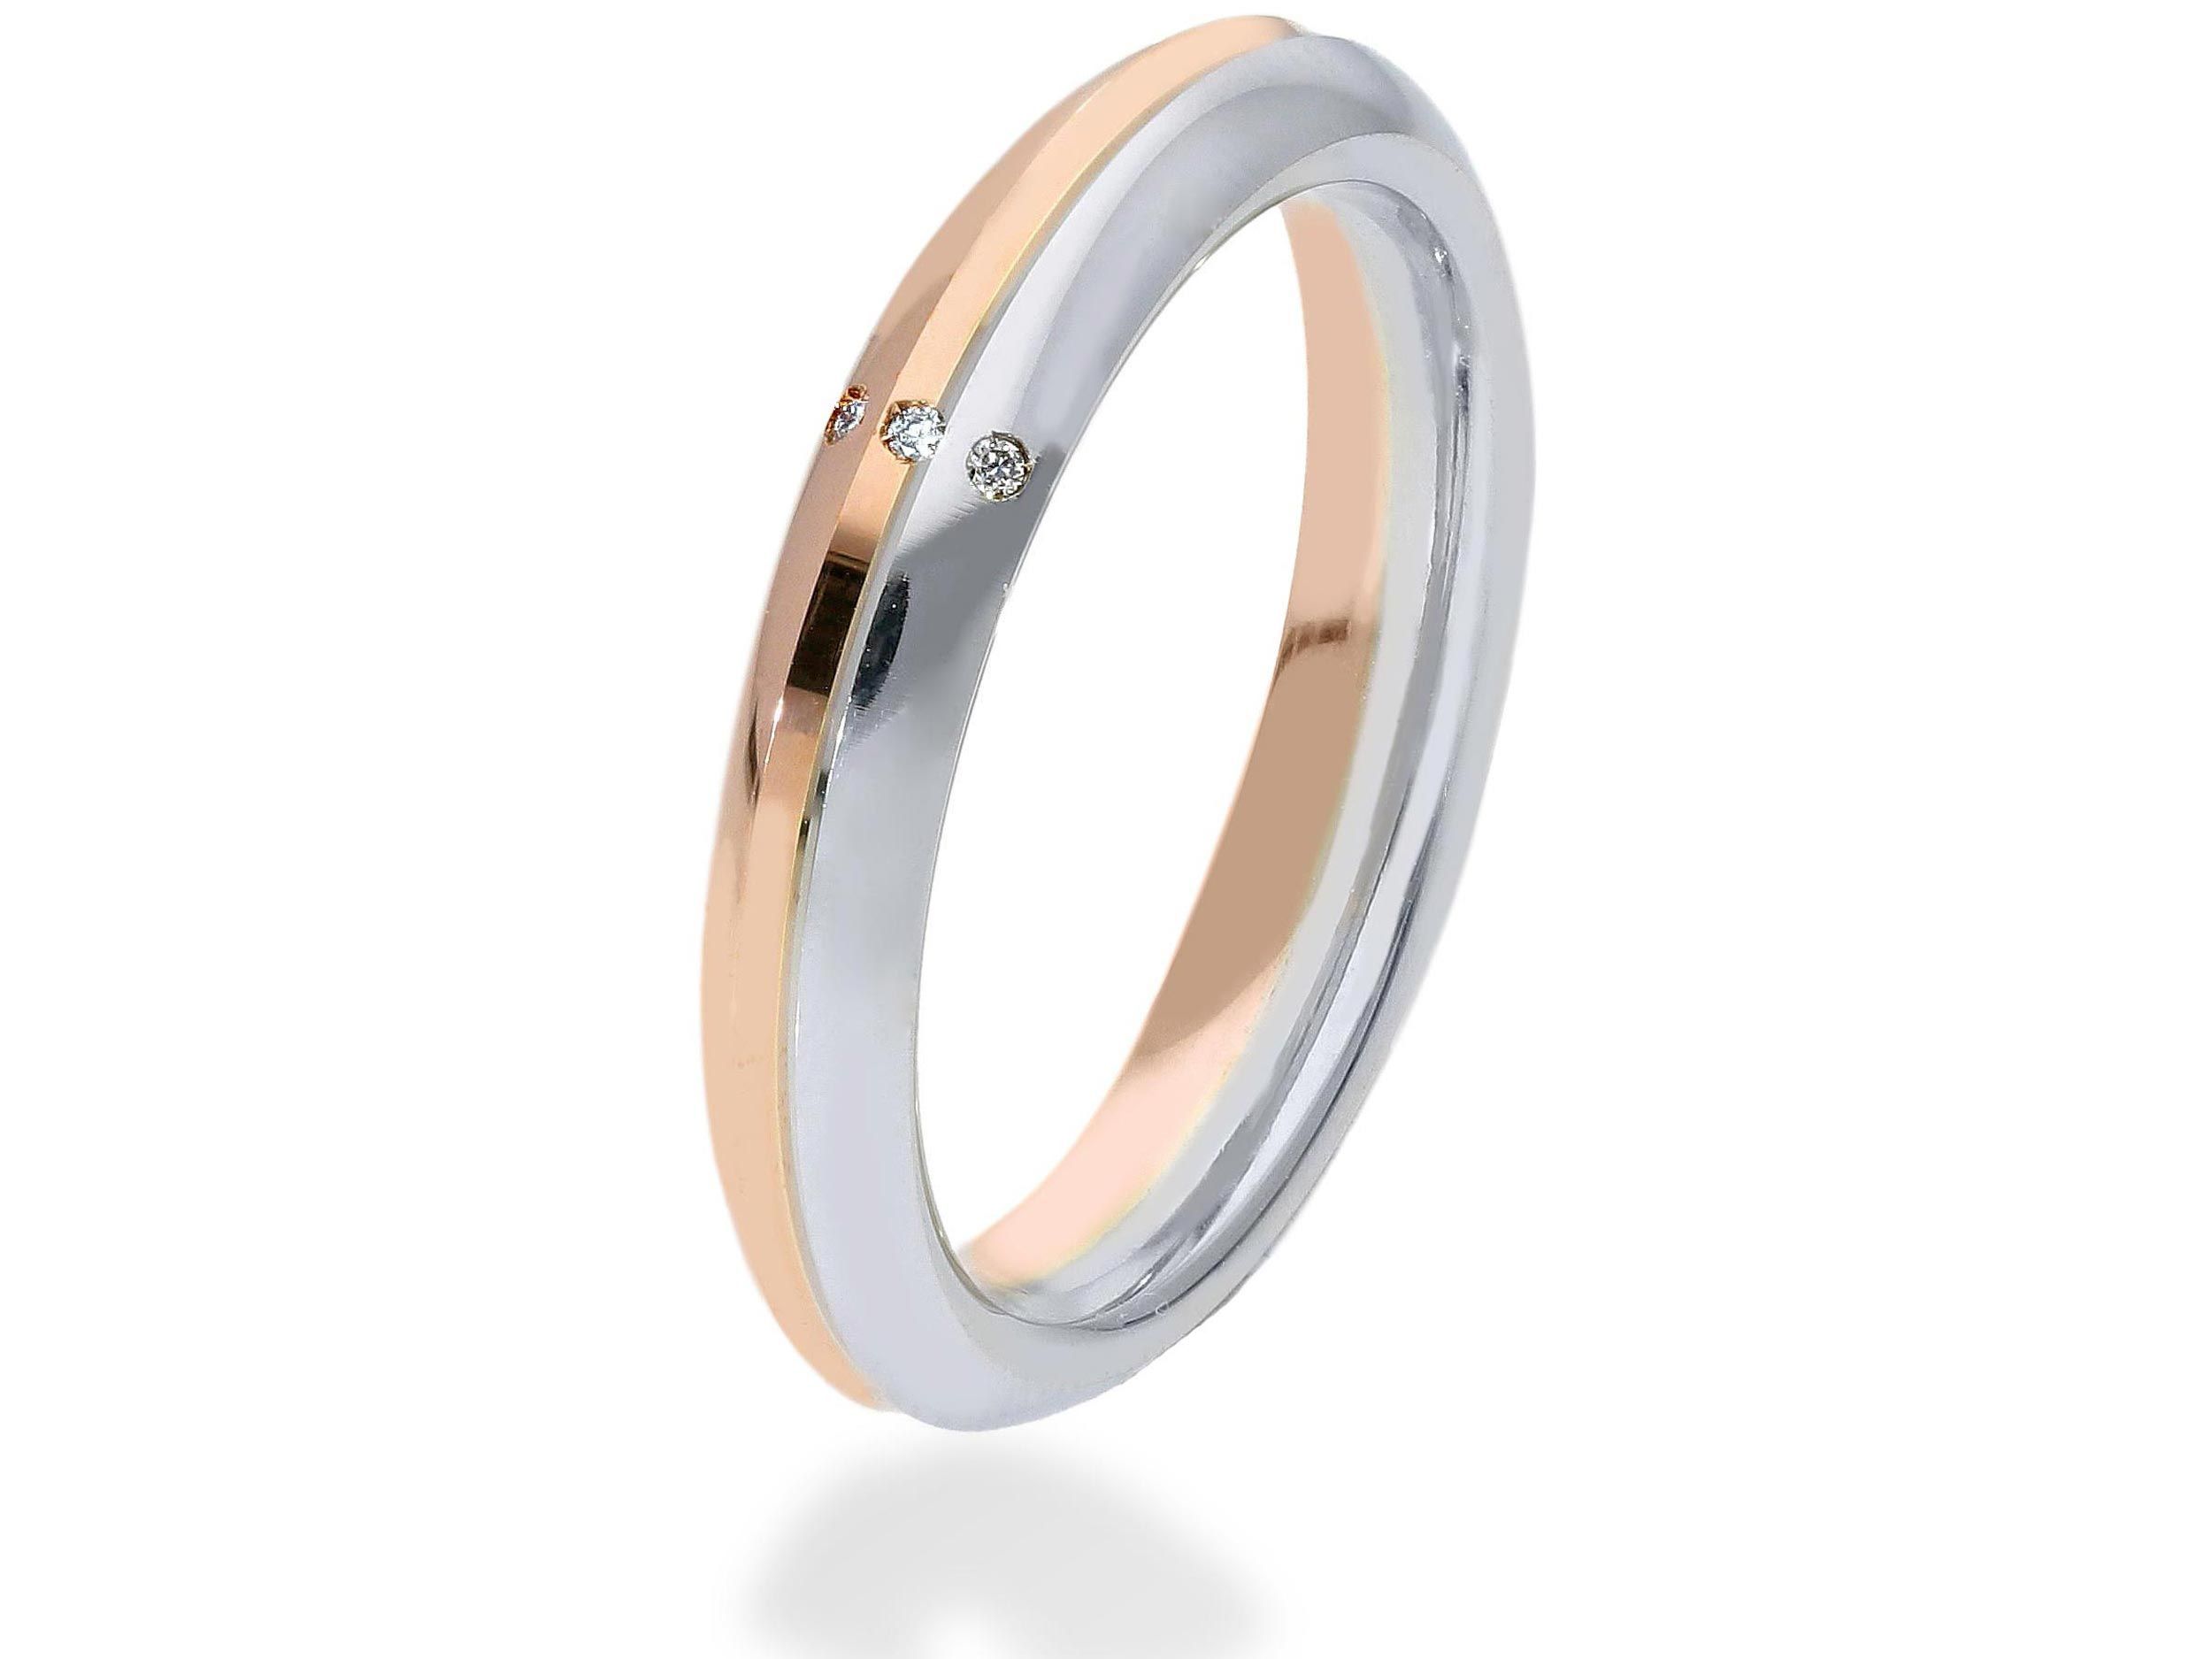 White gold & rose gold wedding rings 18k 4mm (code FAD293BR)